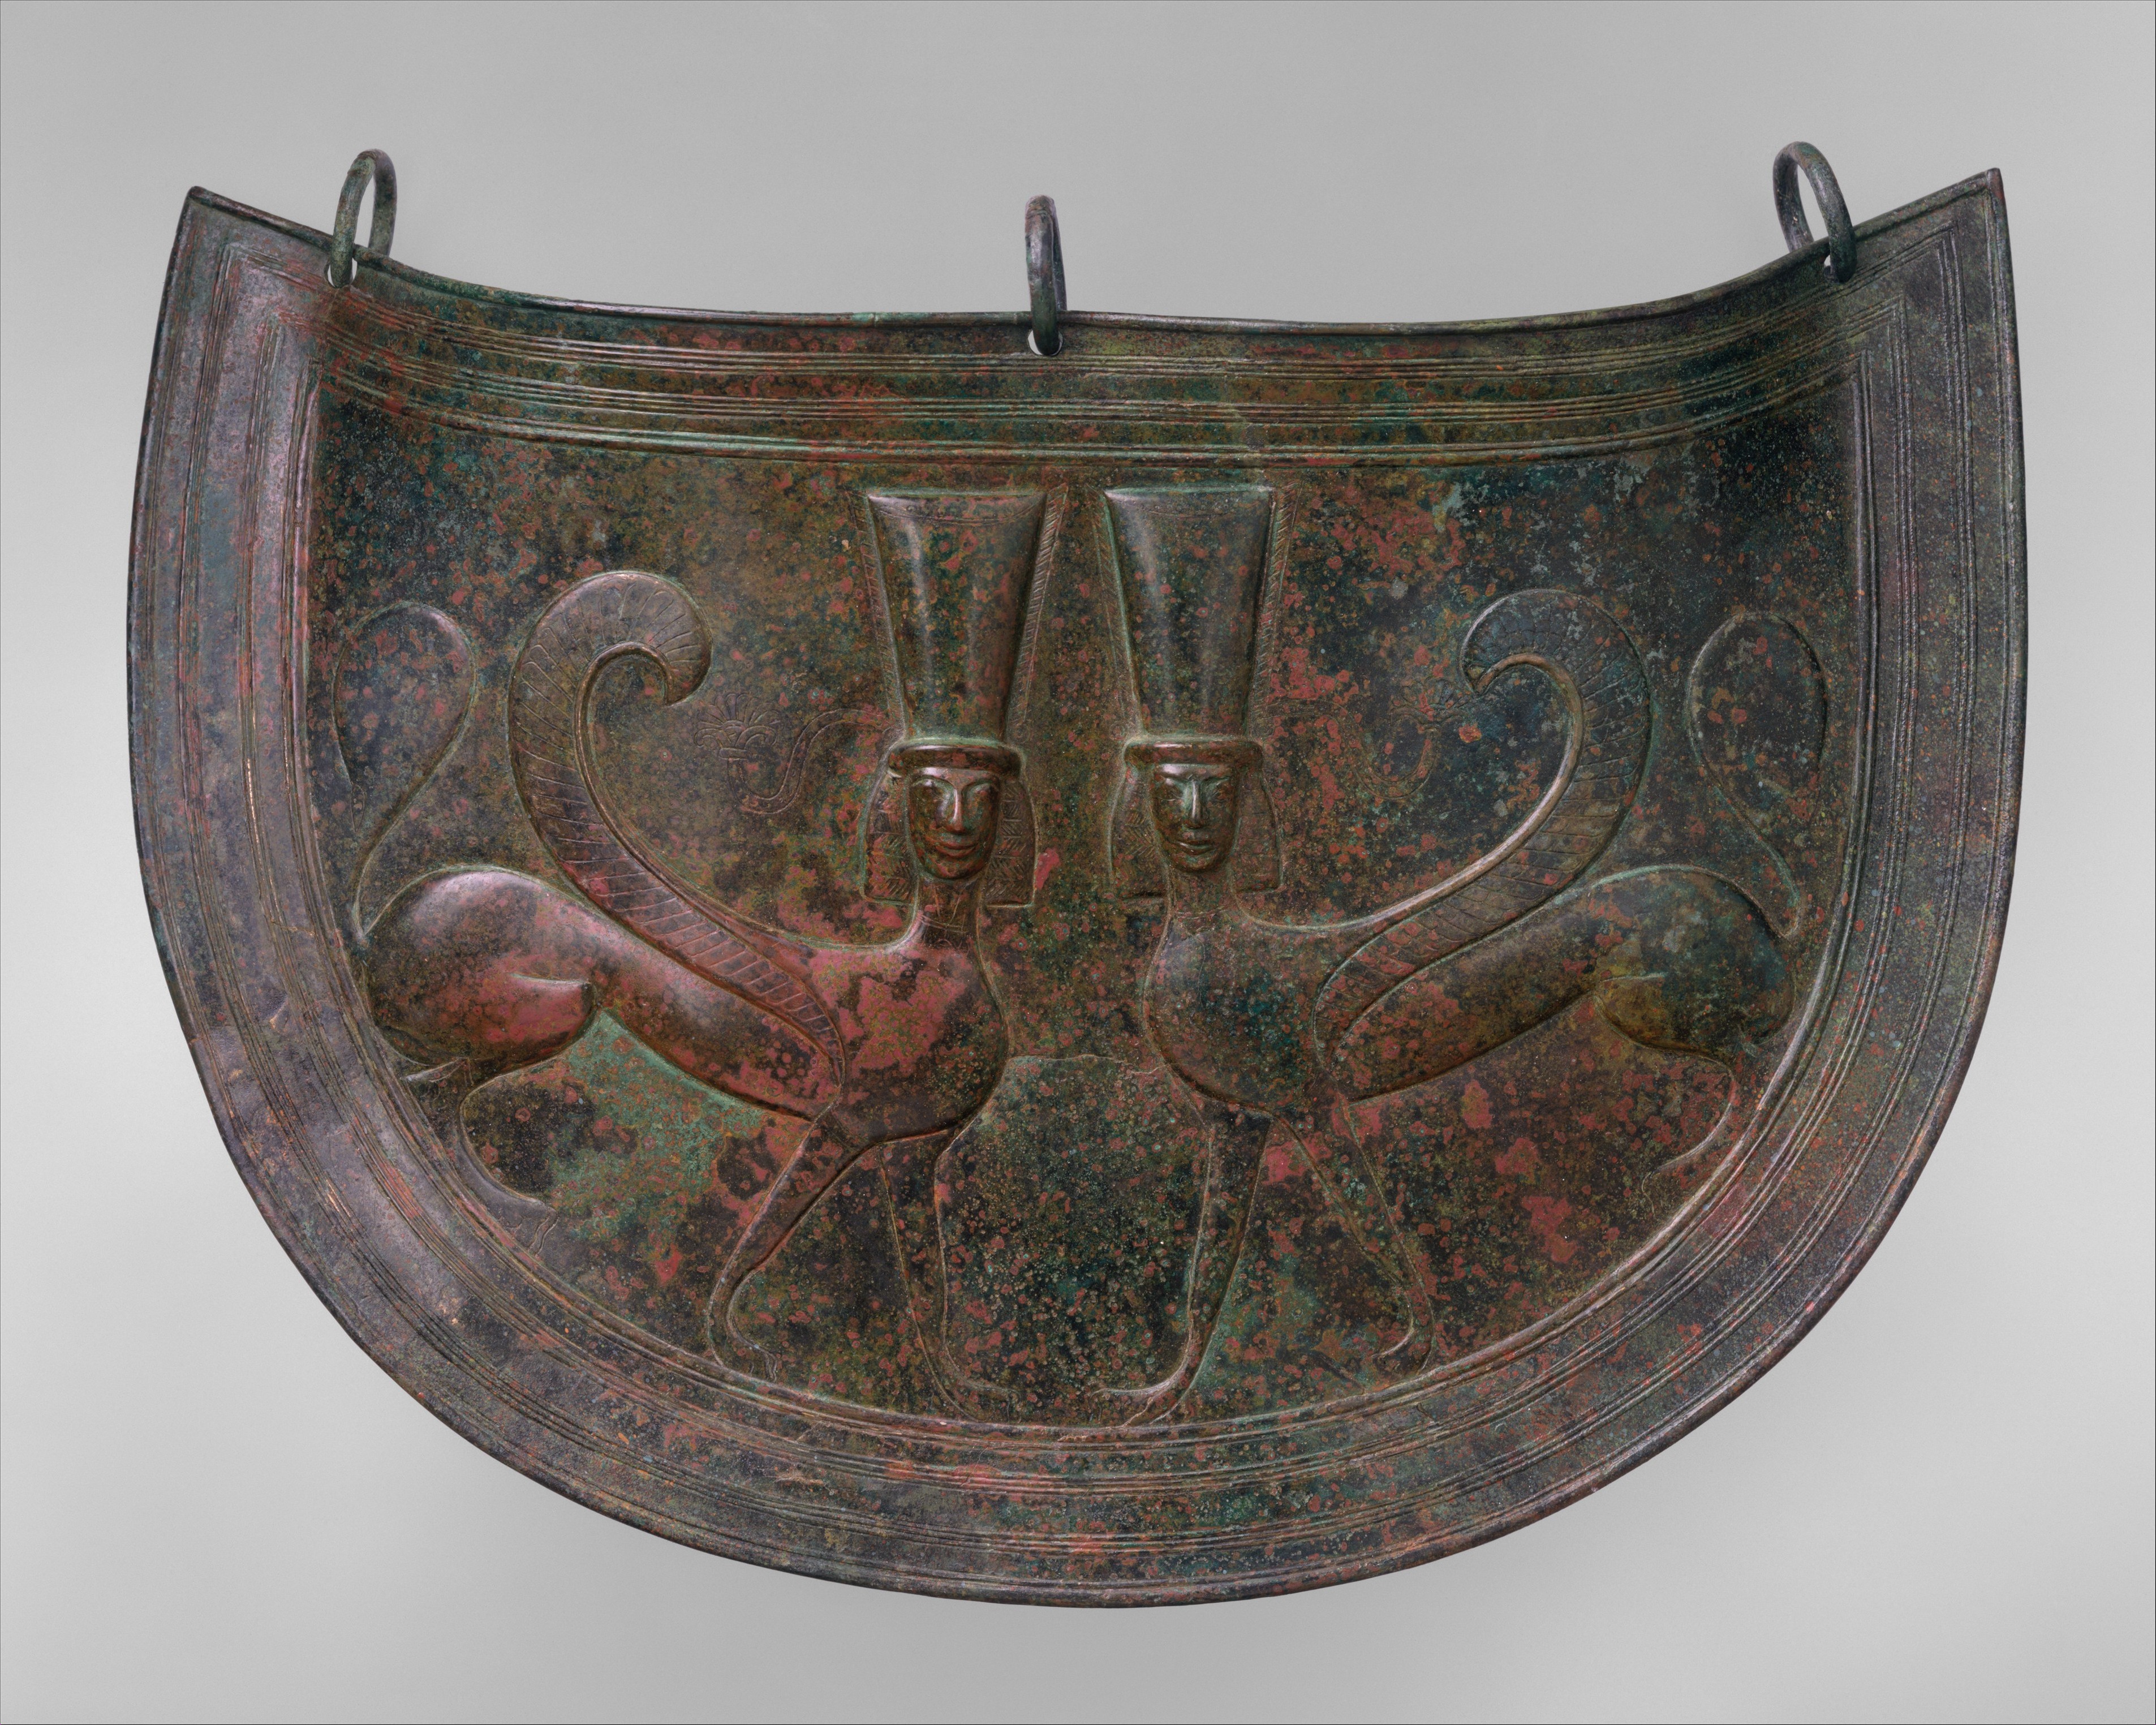 Bronze mitra (belly guard), Greek, Cretan, Archaic